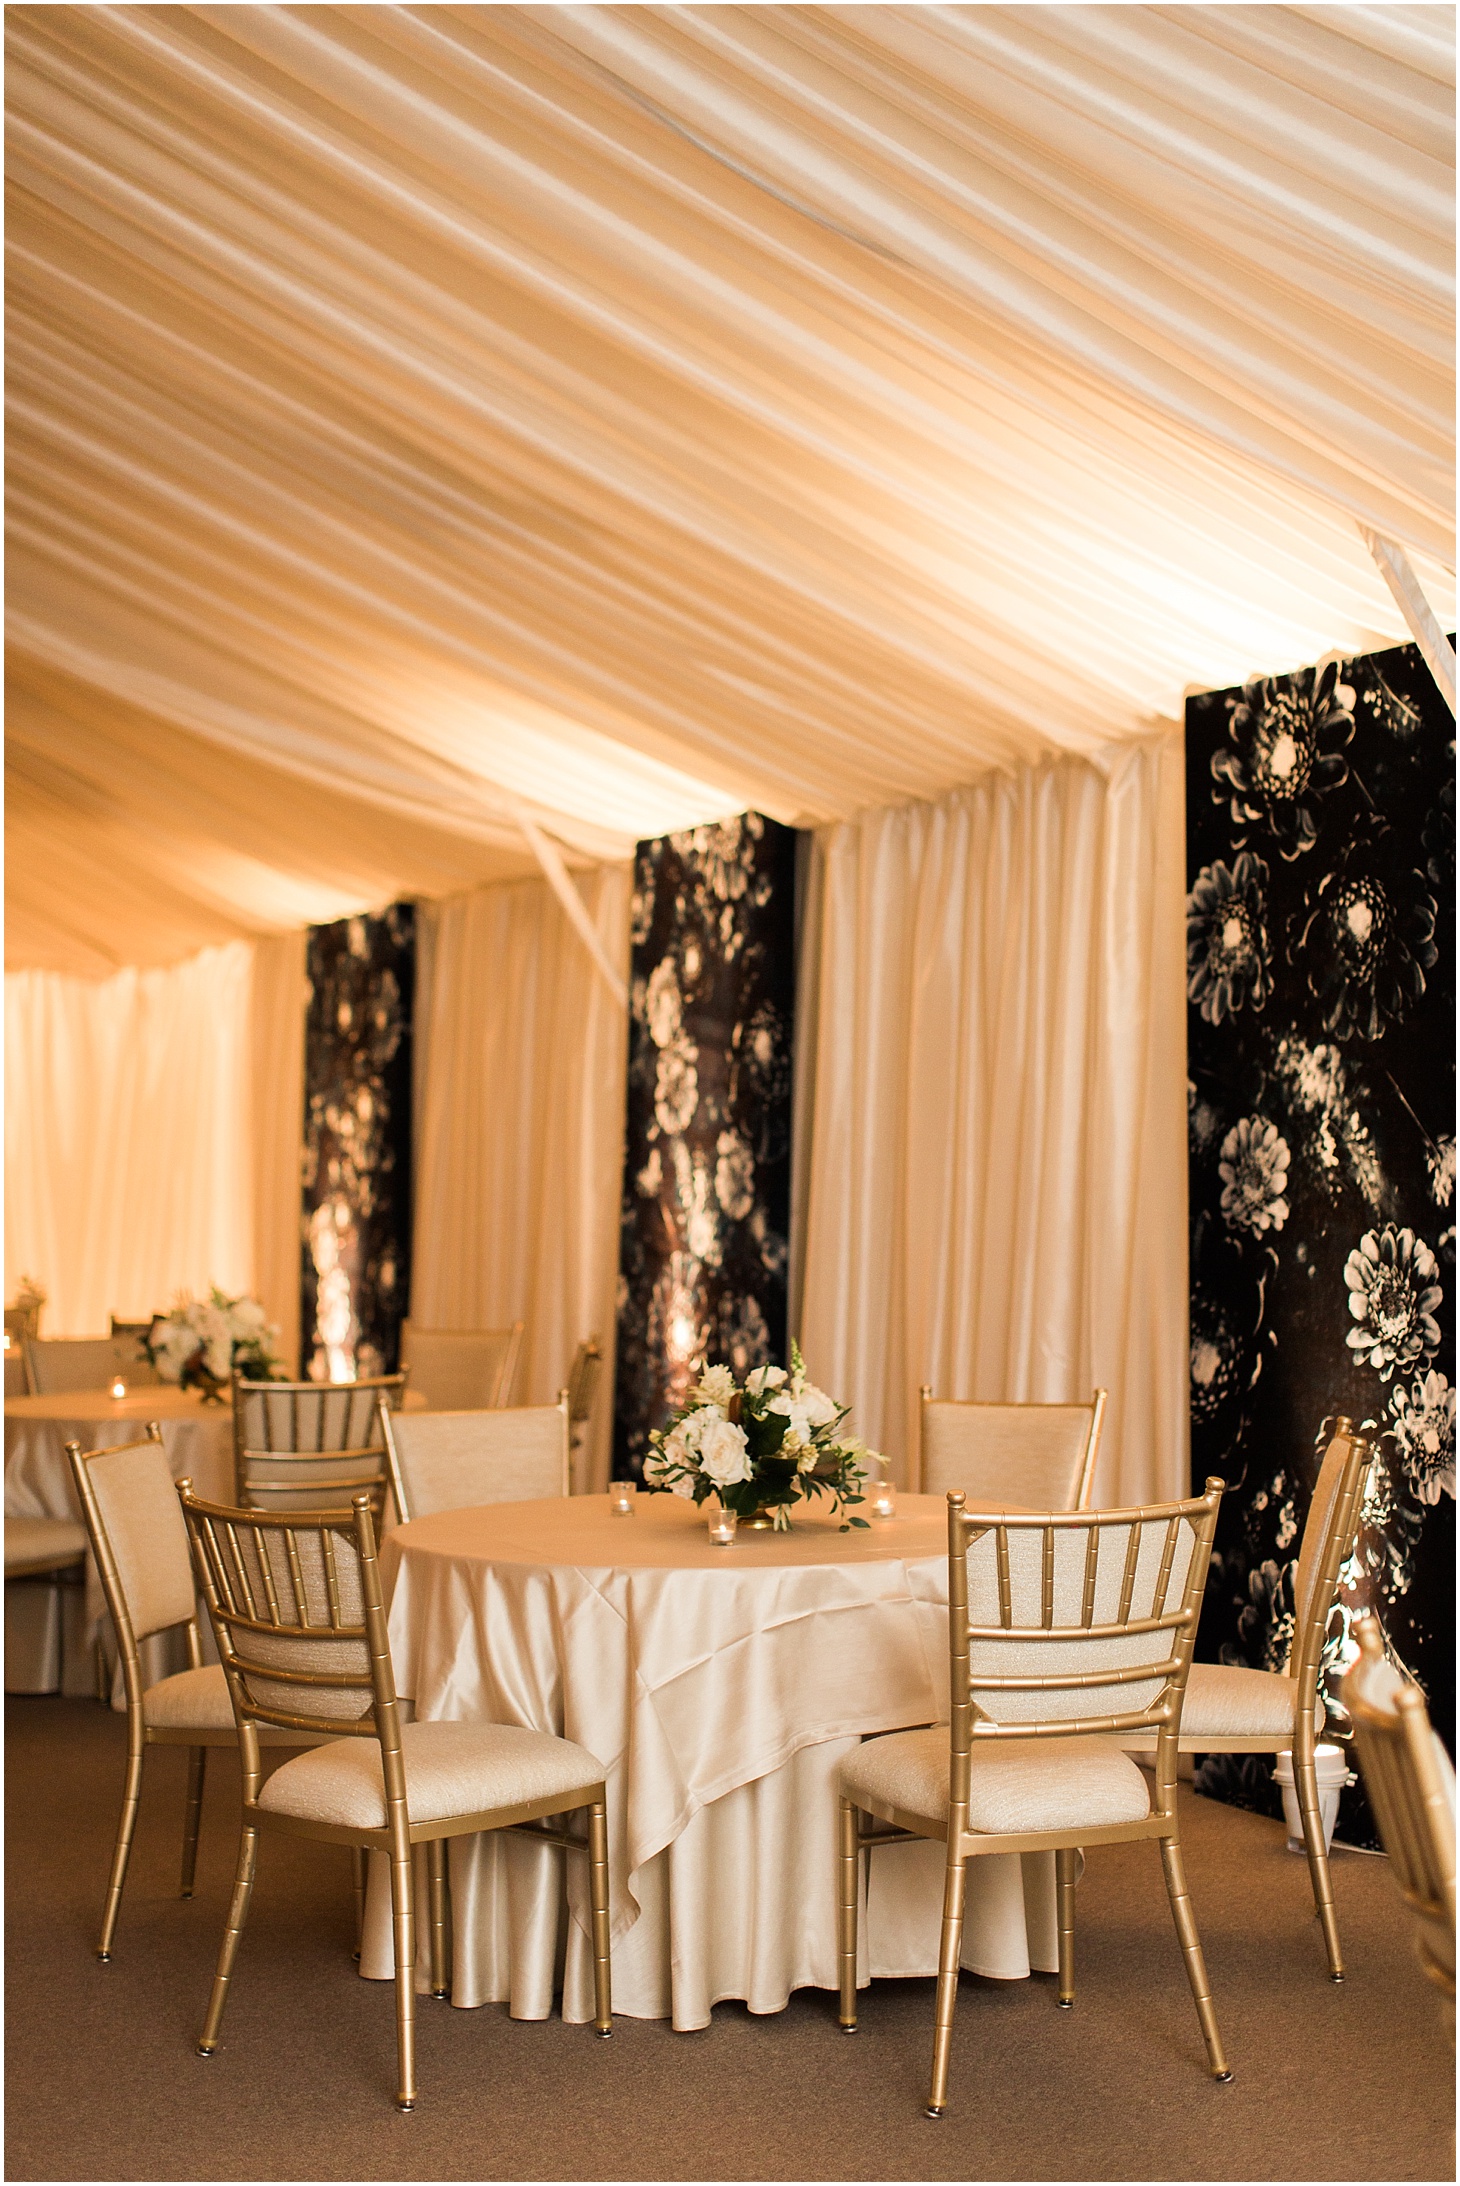 St. Regis Washington, DC Wedding Reception Lounge | Southern Black Tie wedding in Dusty Blue and Ivory | Sarah Bradshaw Photography